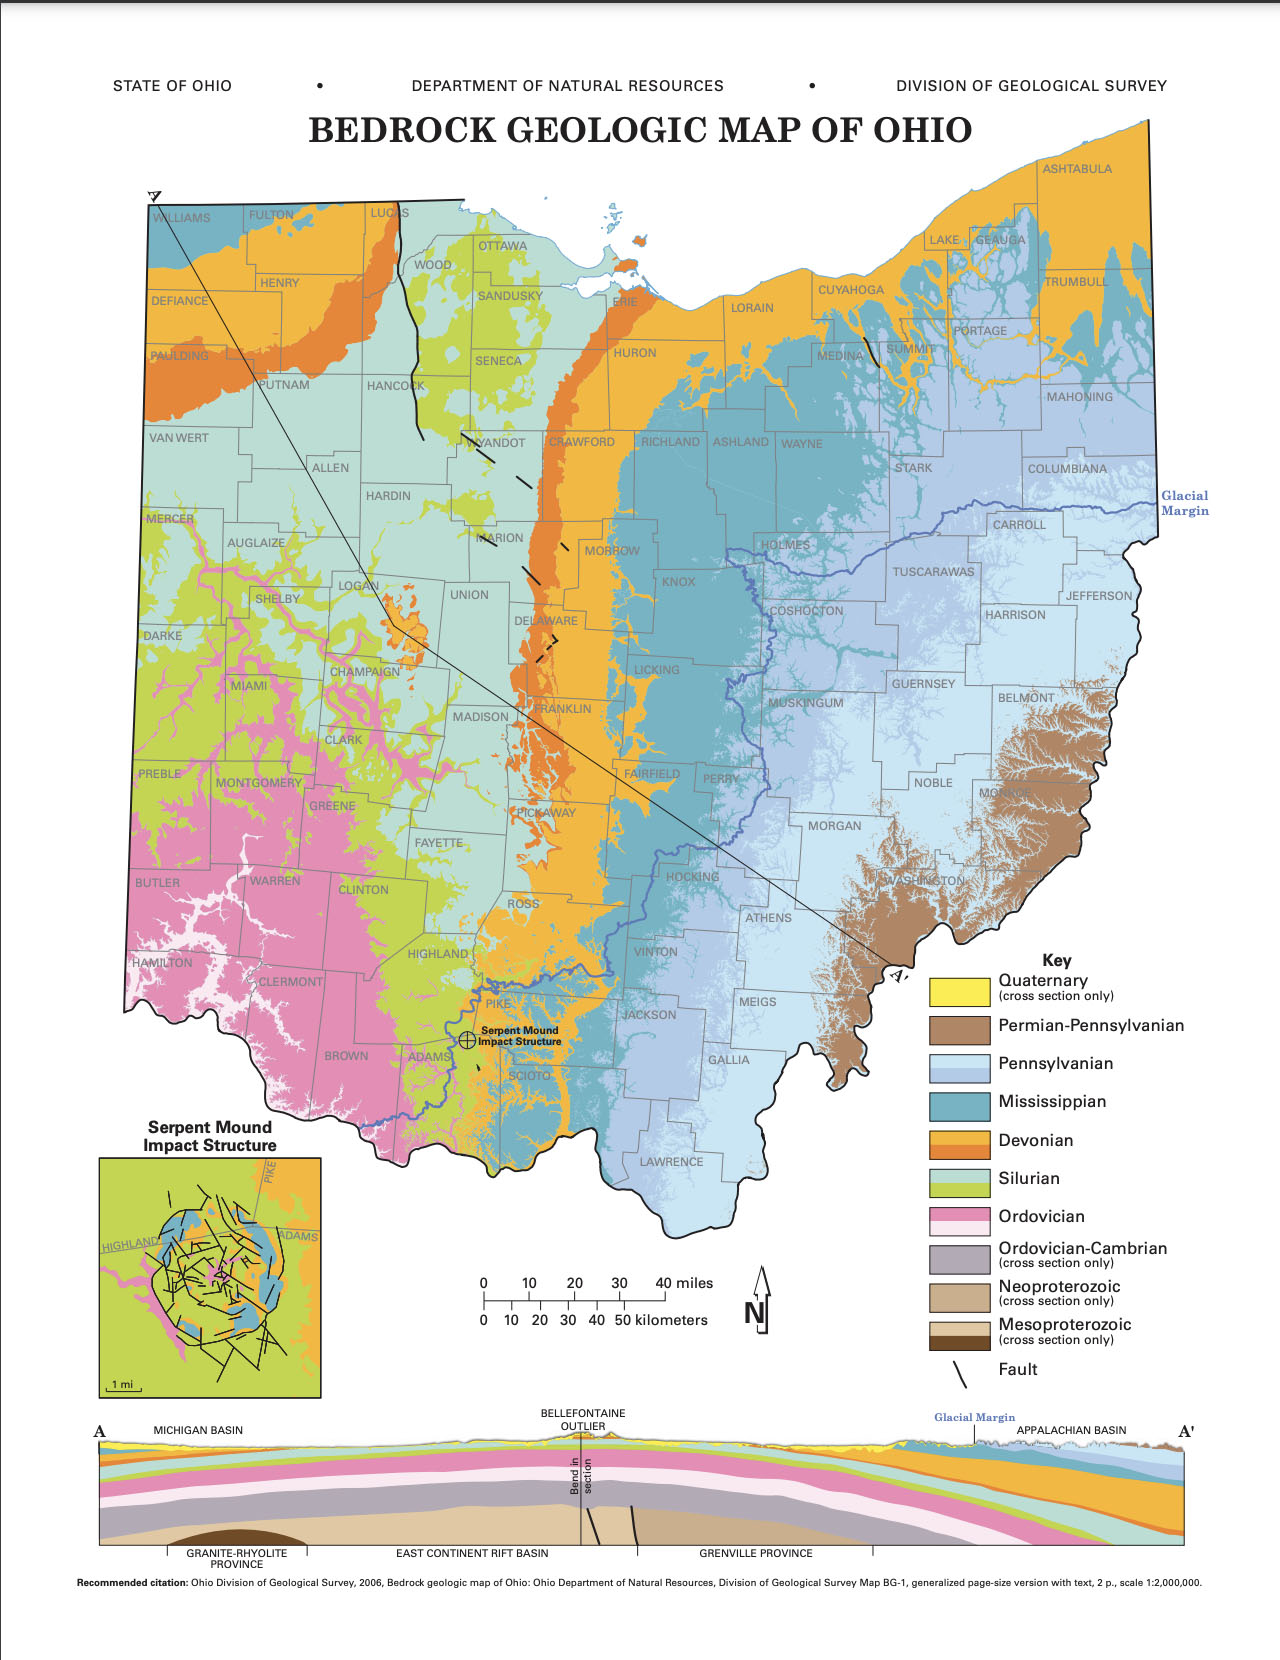 Bedrock geologic map of Ohio.